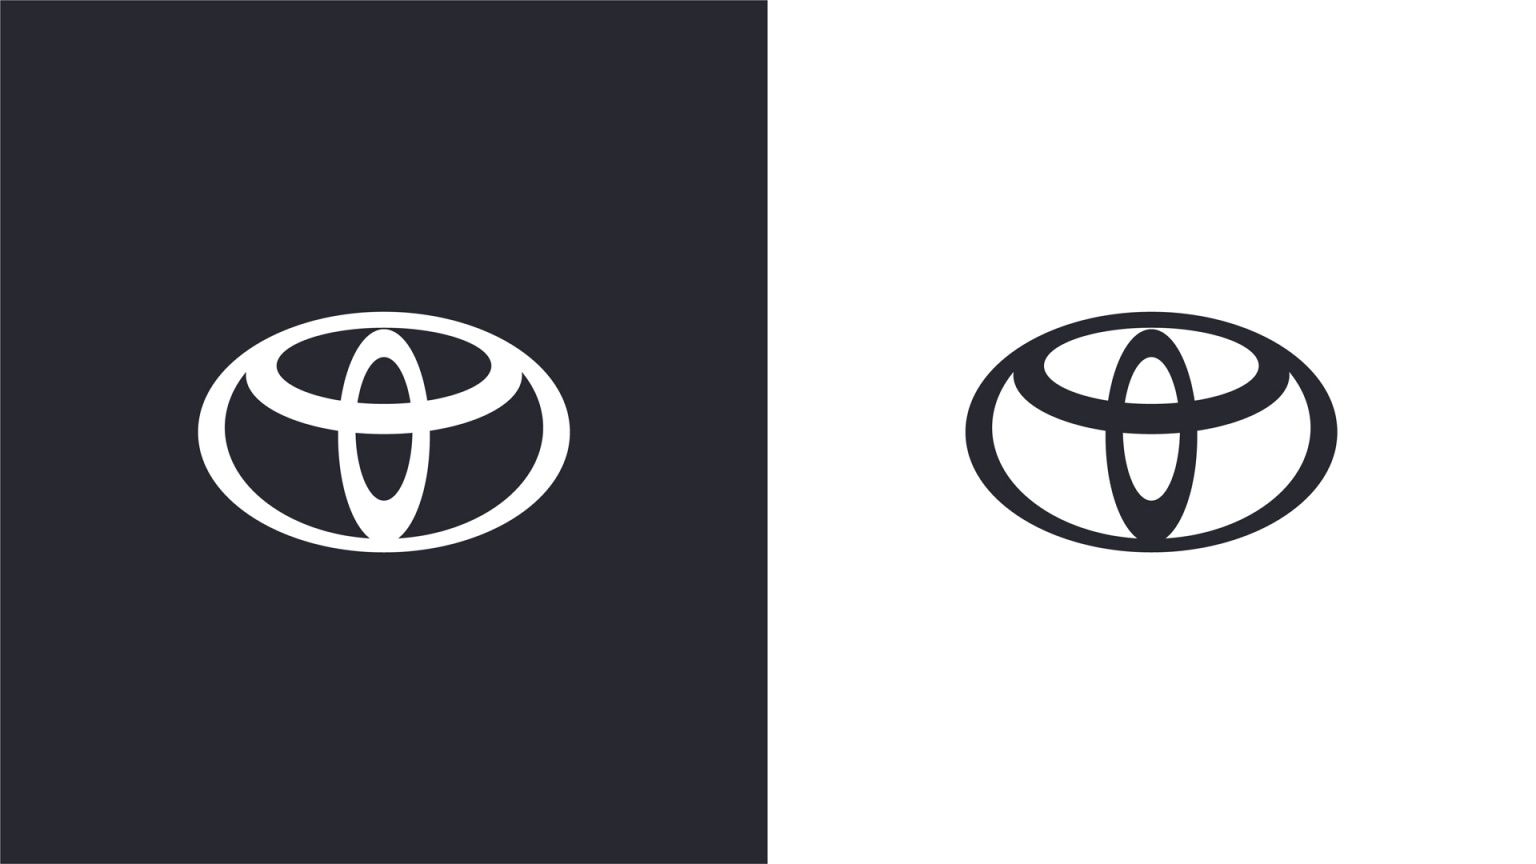 Toyota debuts a new logo